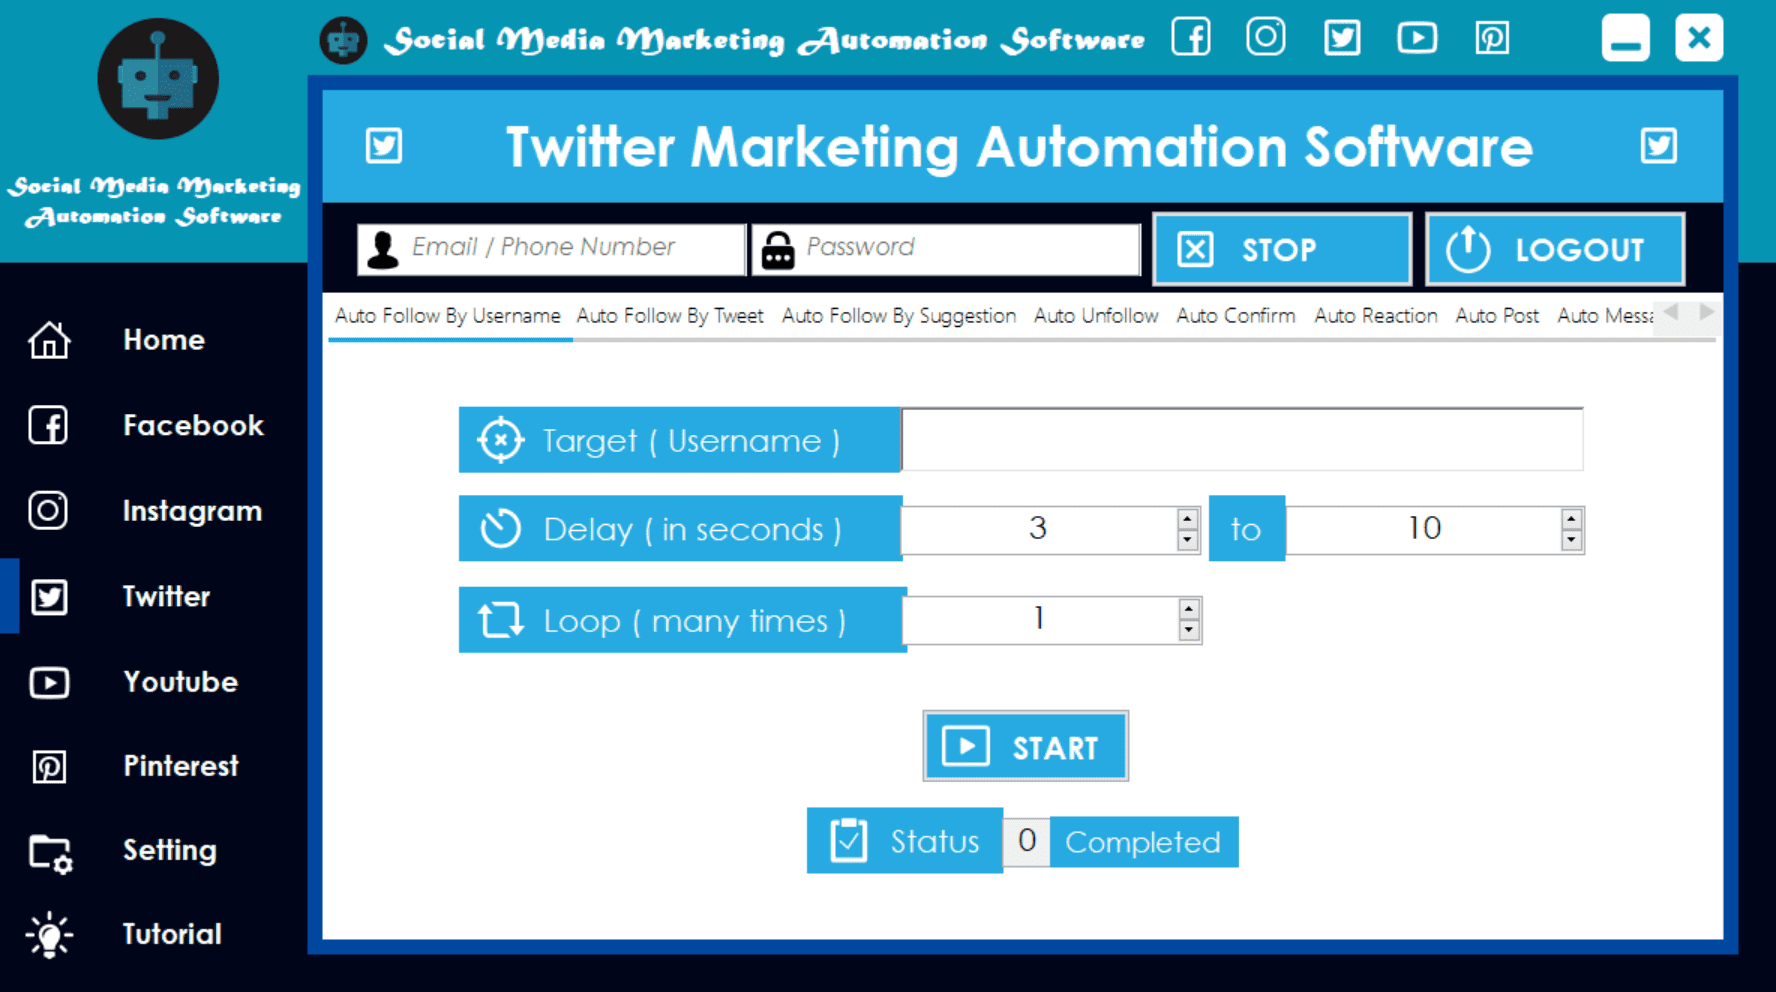 Twitter Marketing Automation Software